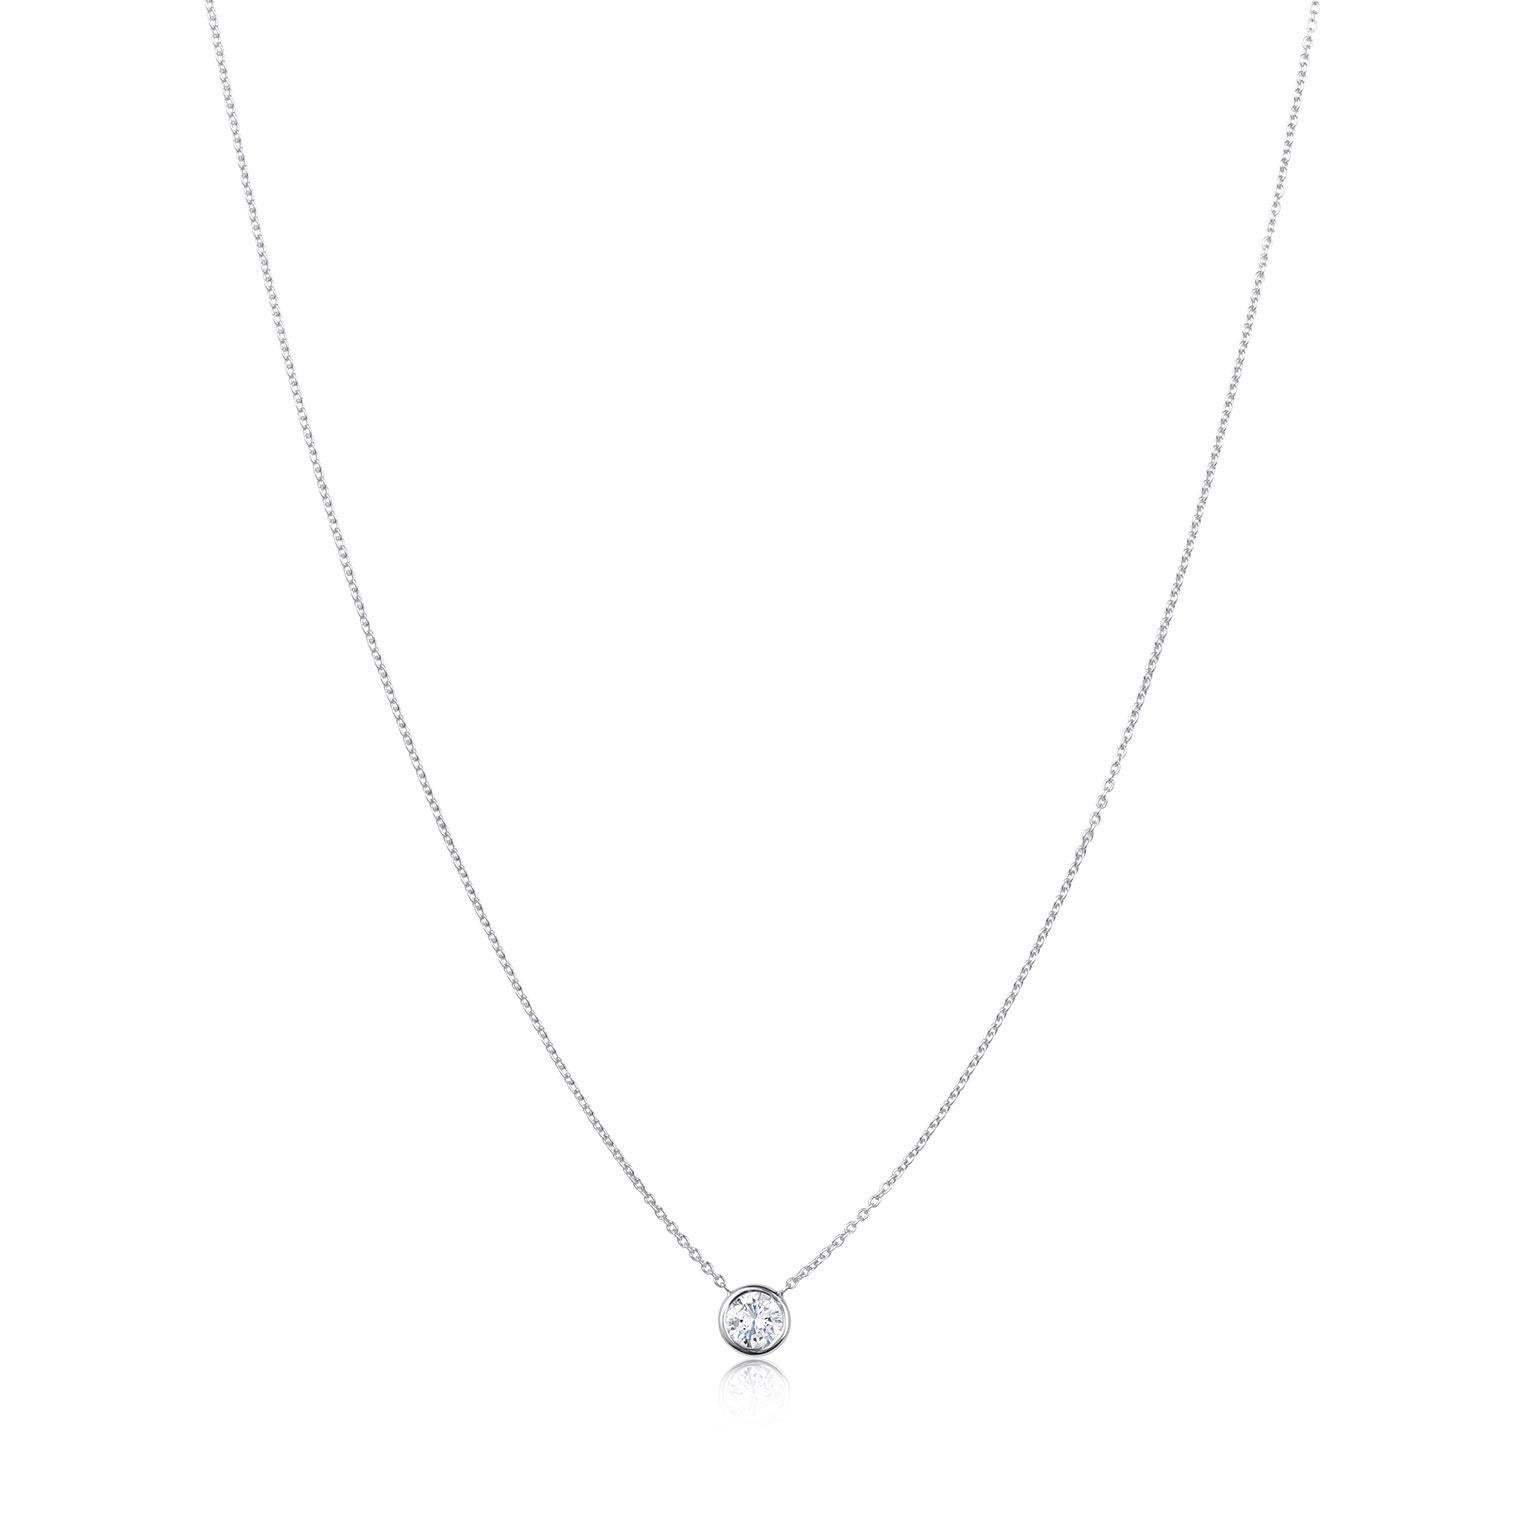 Taille ronde Collier pendentif en diamants taille brillant rond de 0,50 carat en vente